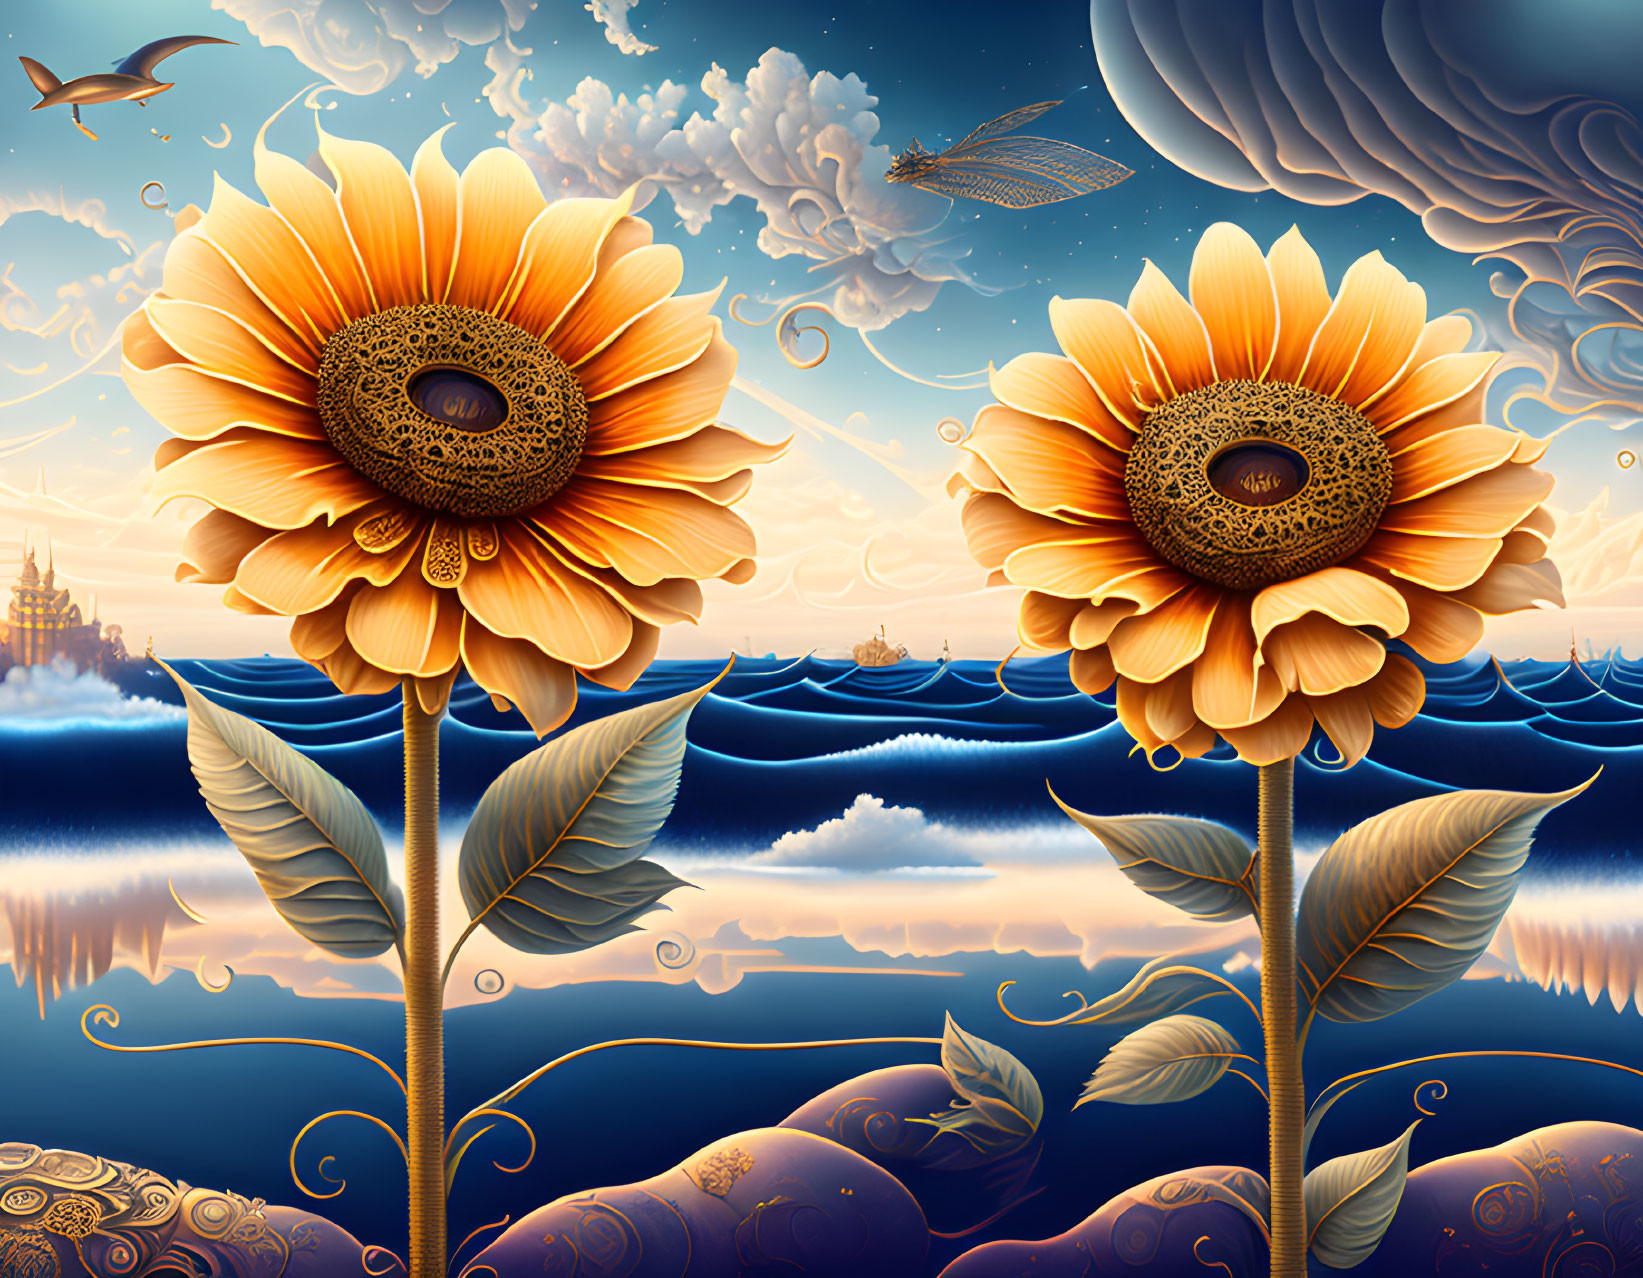 Stylized sunflowers and golden bird in surreal ocean scene